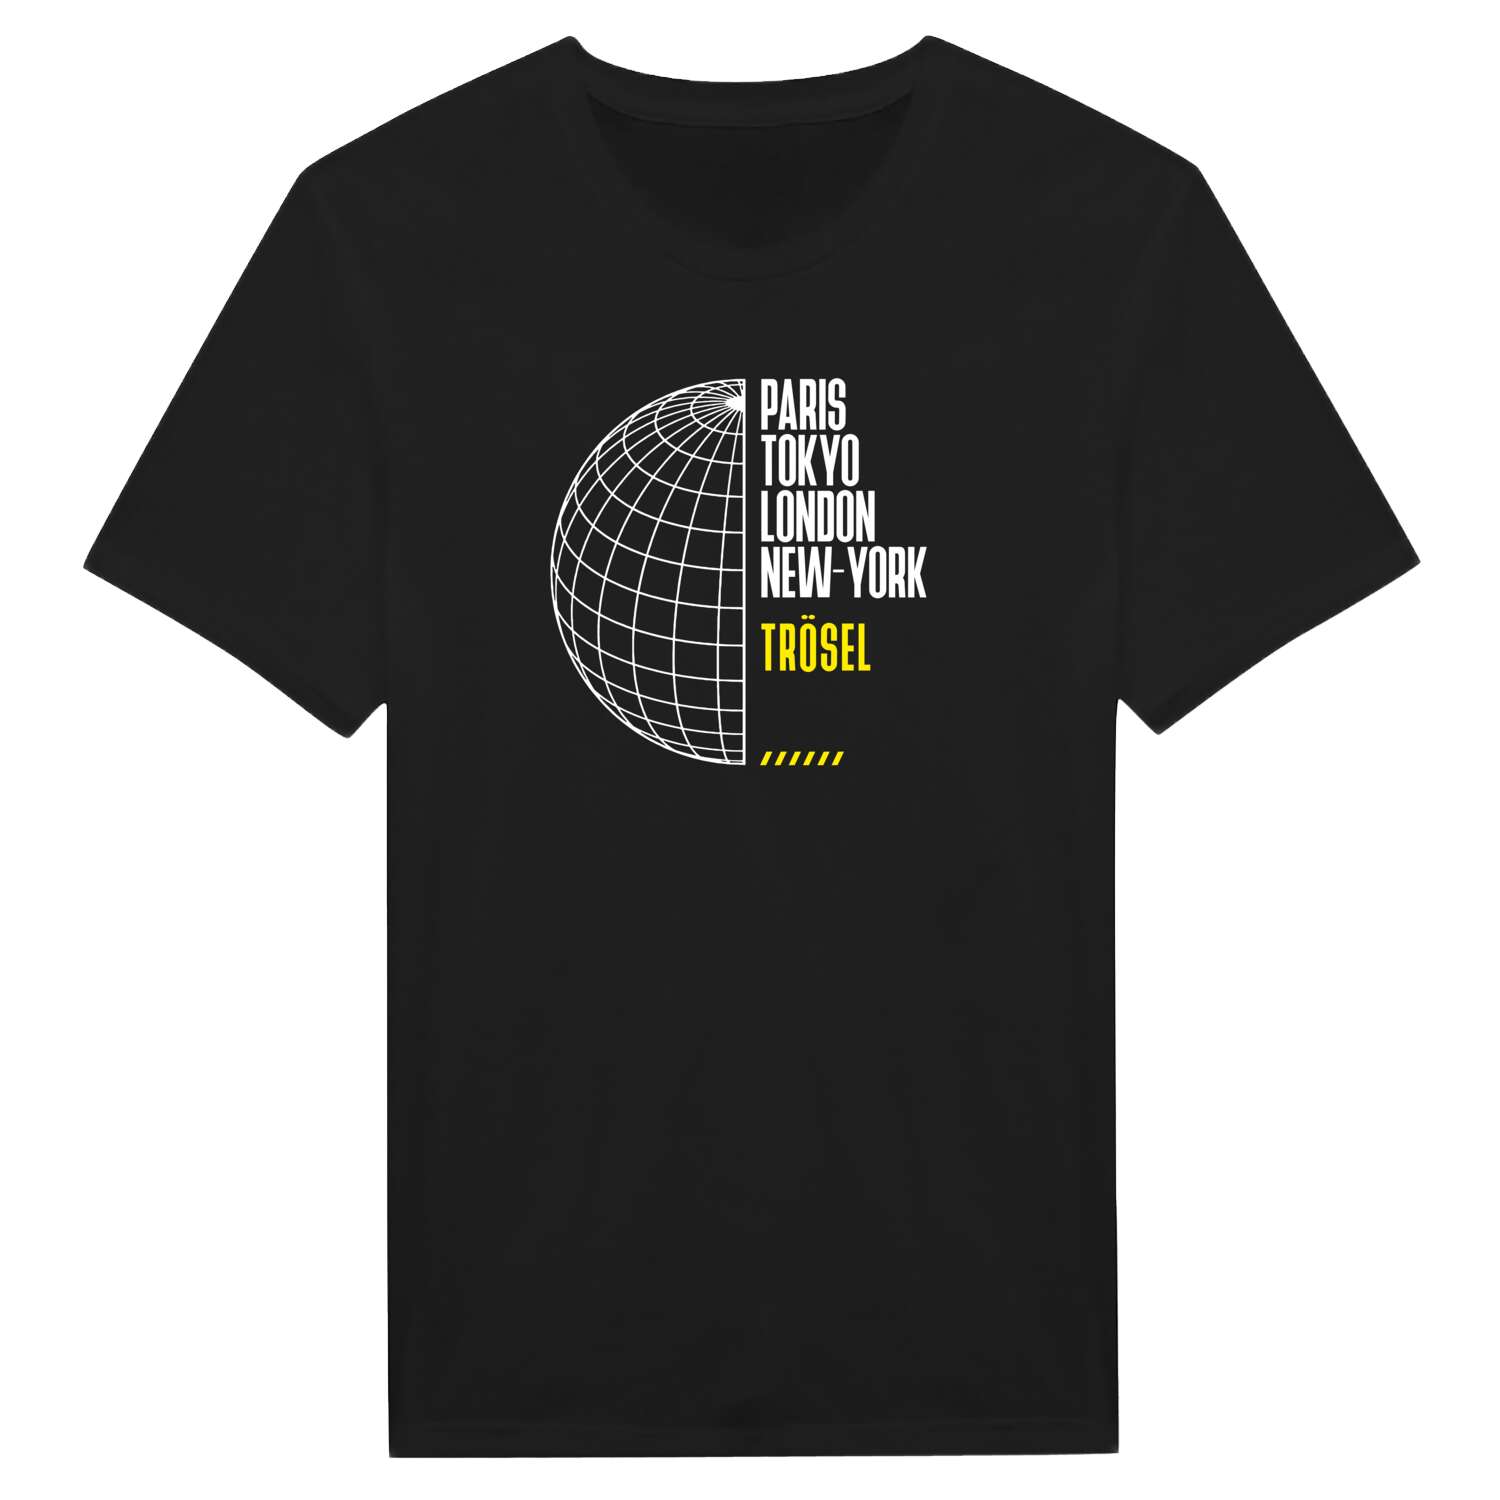 Trösel T-Shirt »Paris Tokyo London«